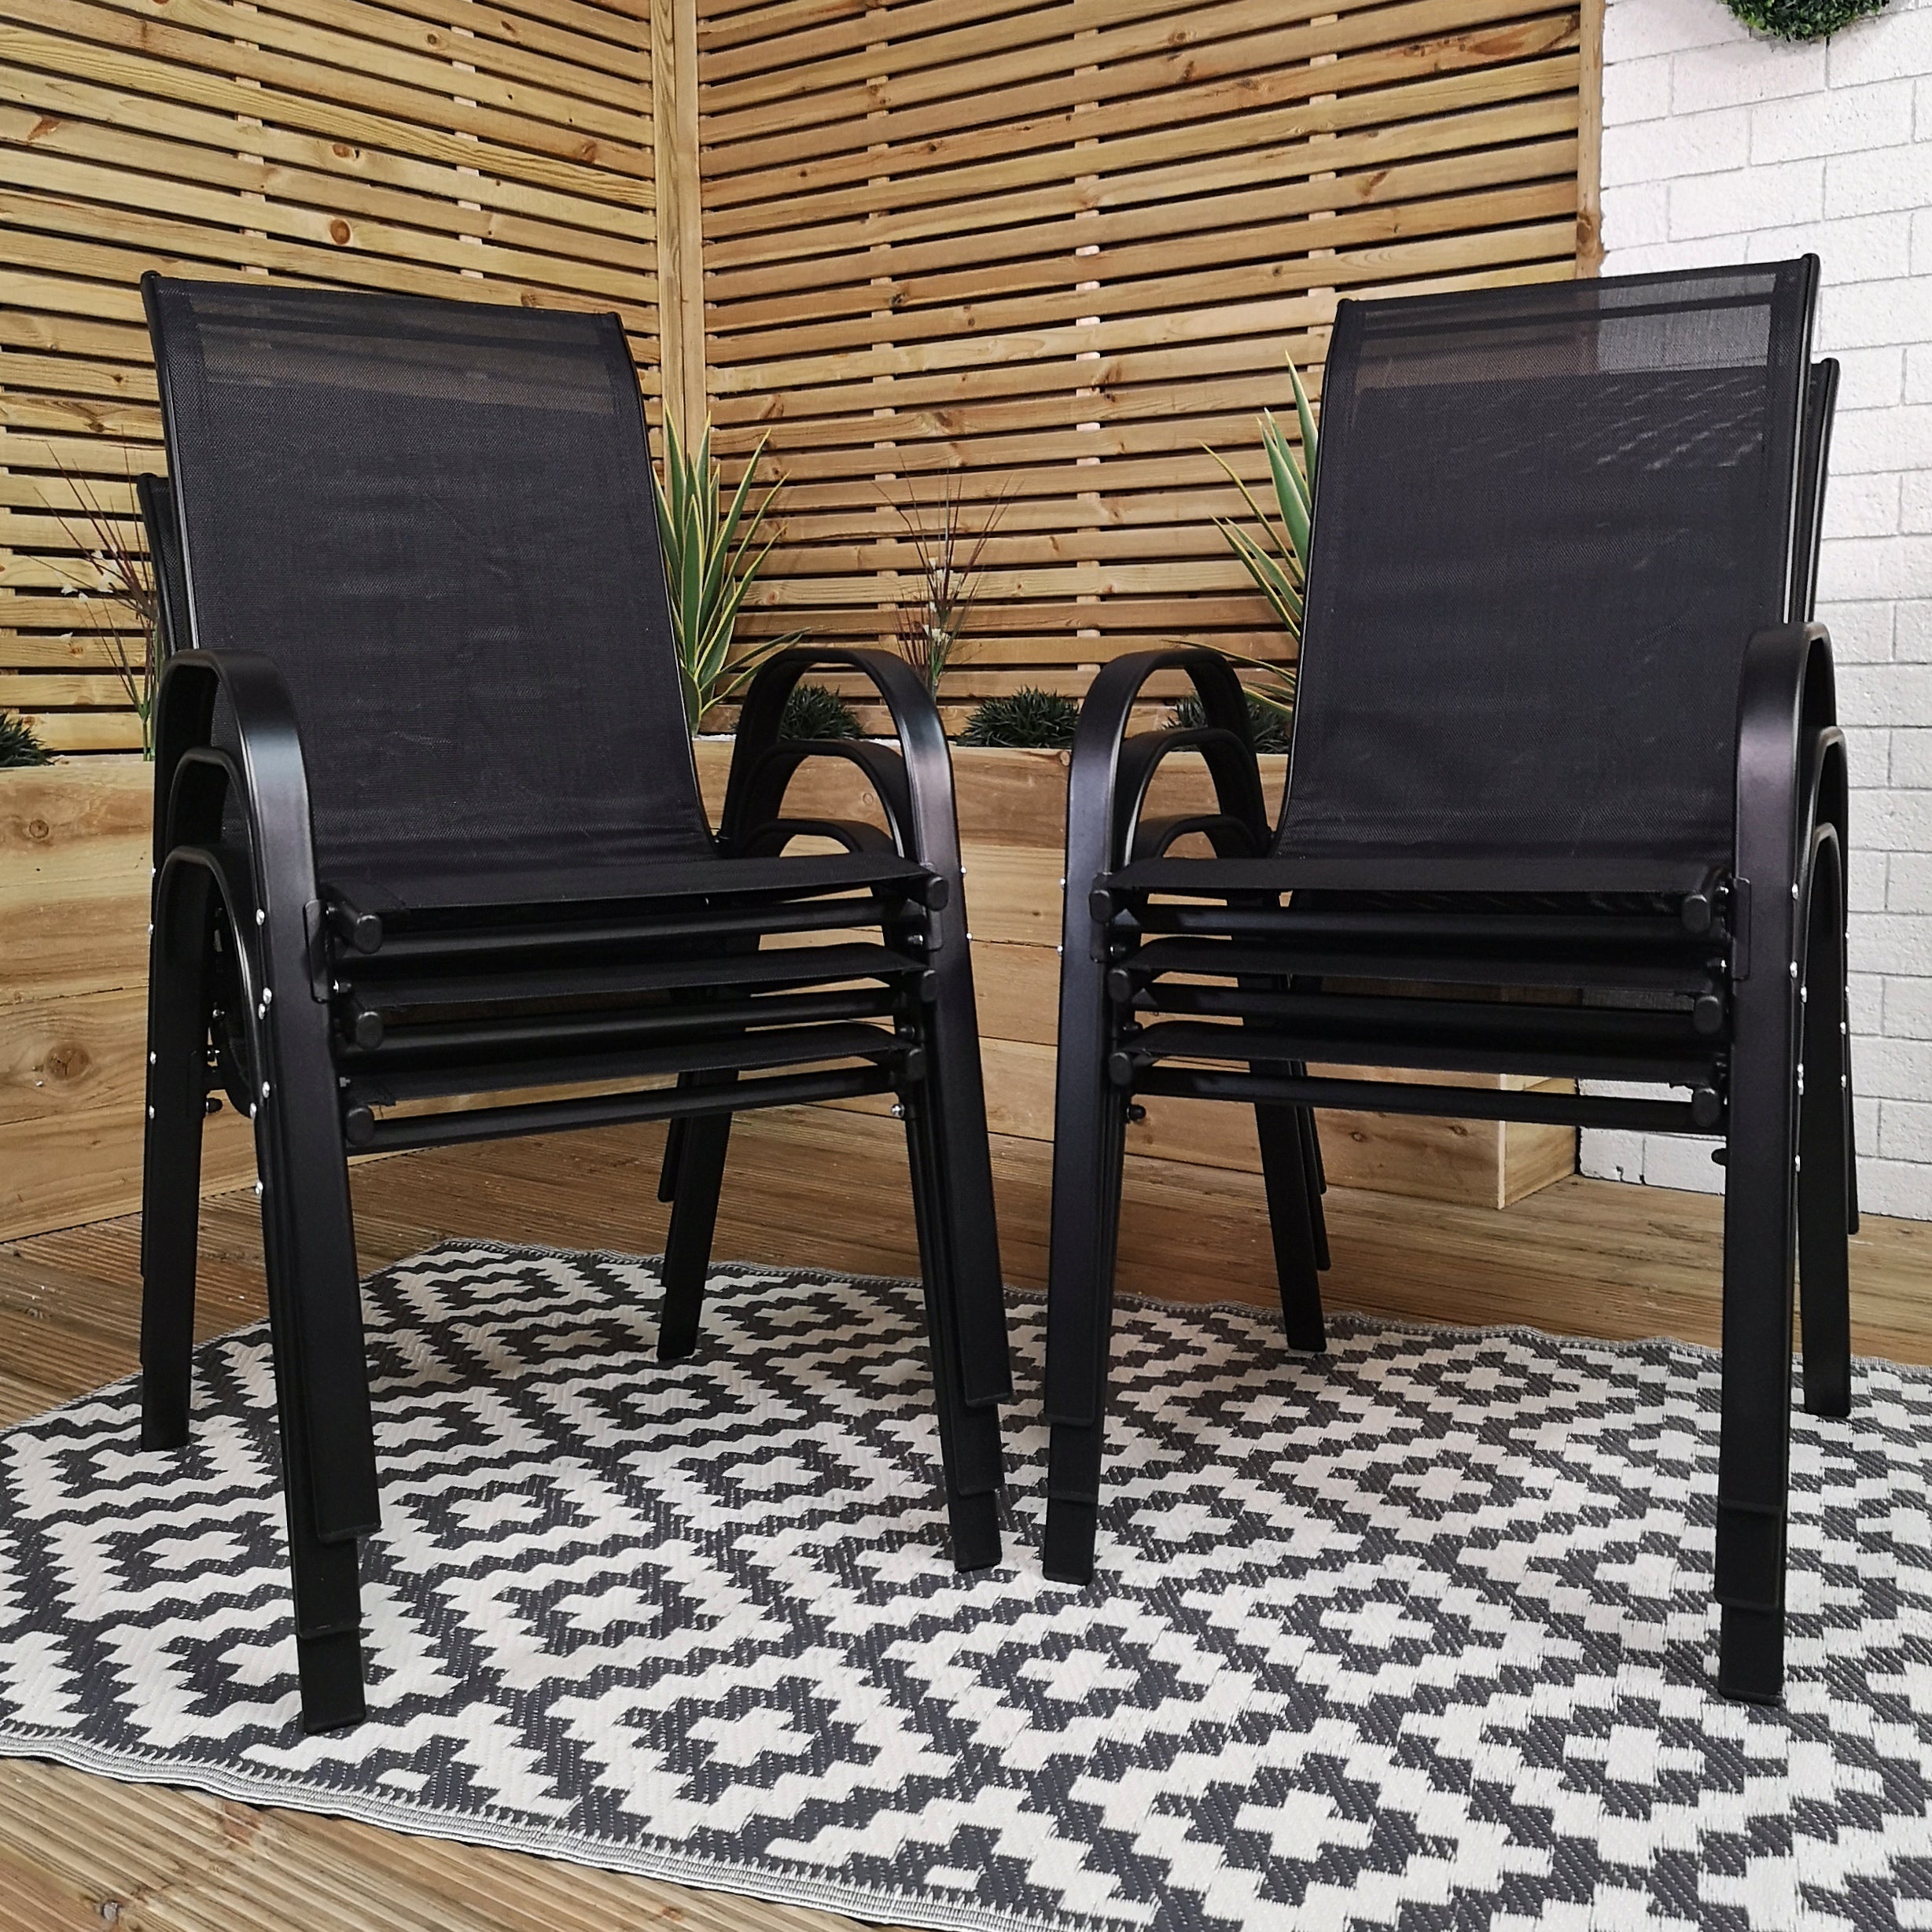 Set of 4 Outdoor Garden Patio Textilene Furniture Chairs in Black